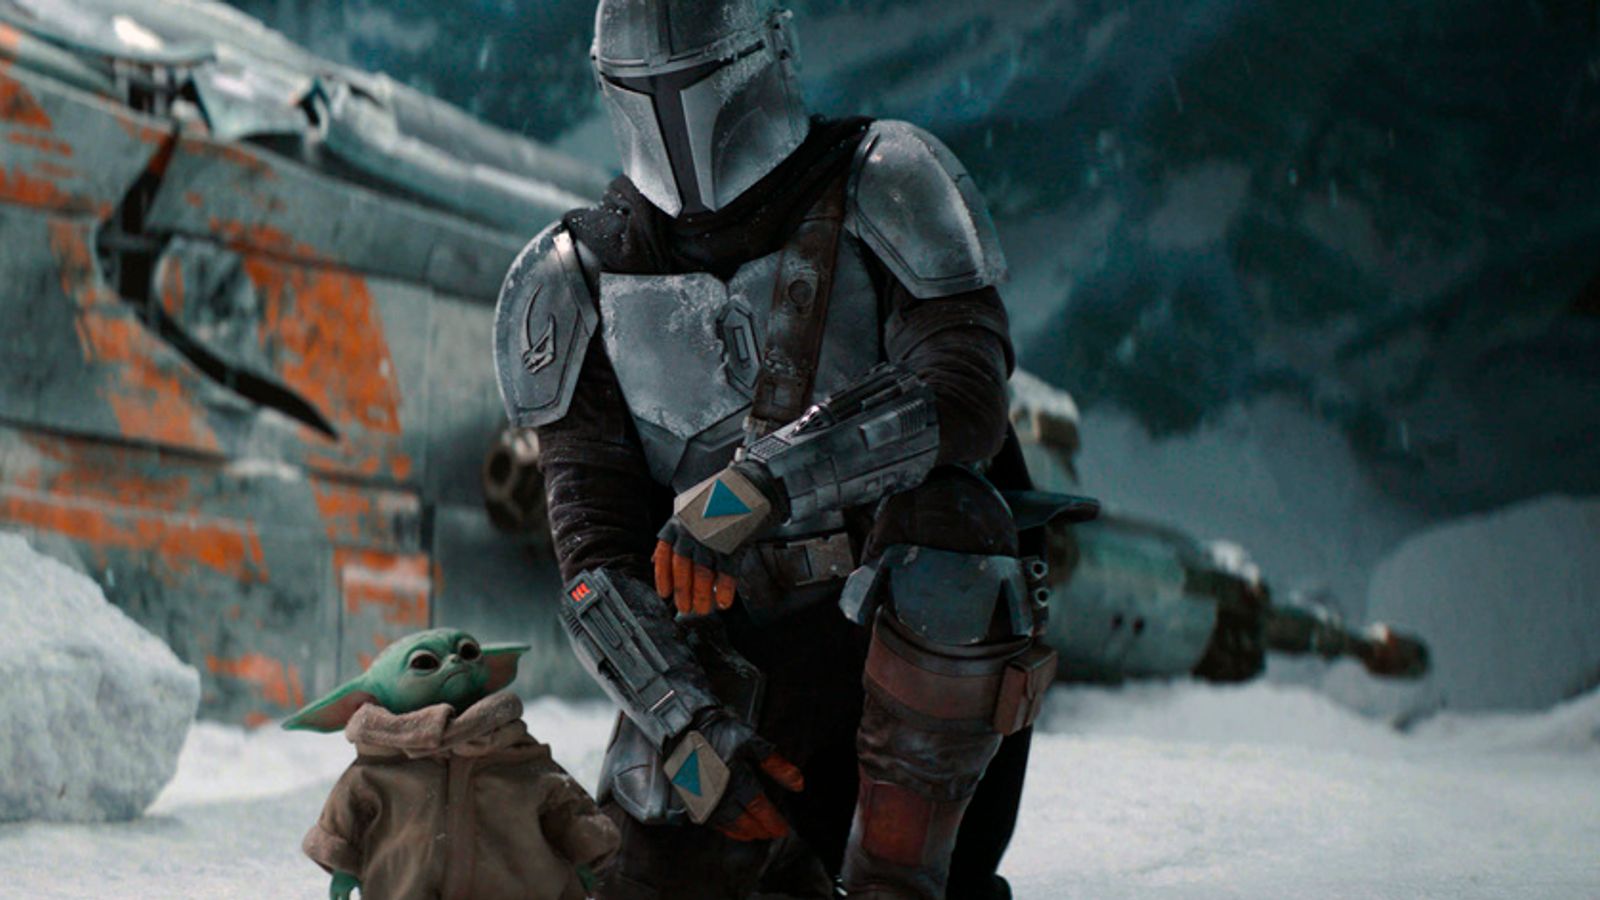 The Mandalorian and Grogu: Baby Yoda heading to the big screen in new Star Wars film